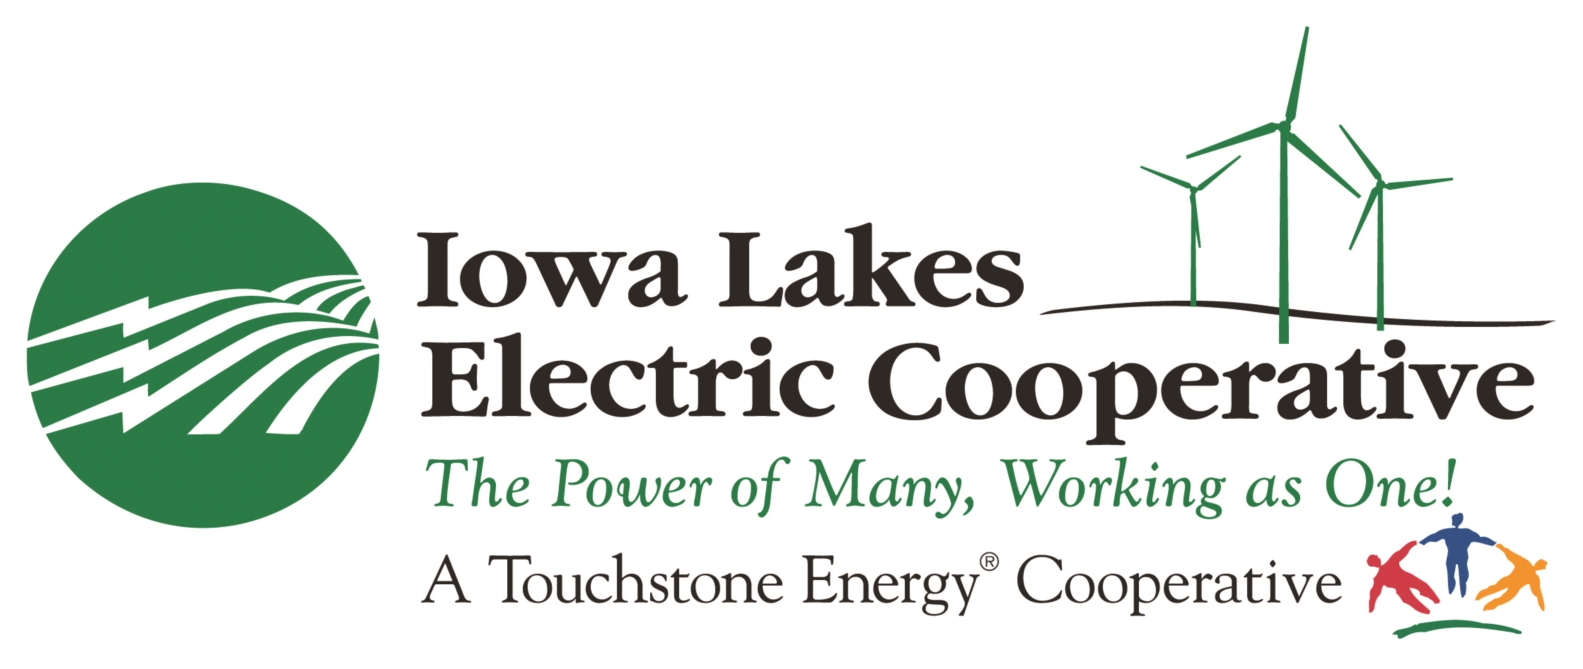 Iowa Lakes Electric Cooperative logo